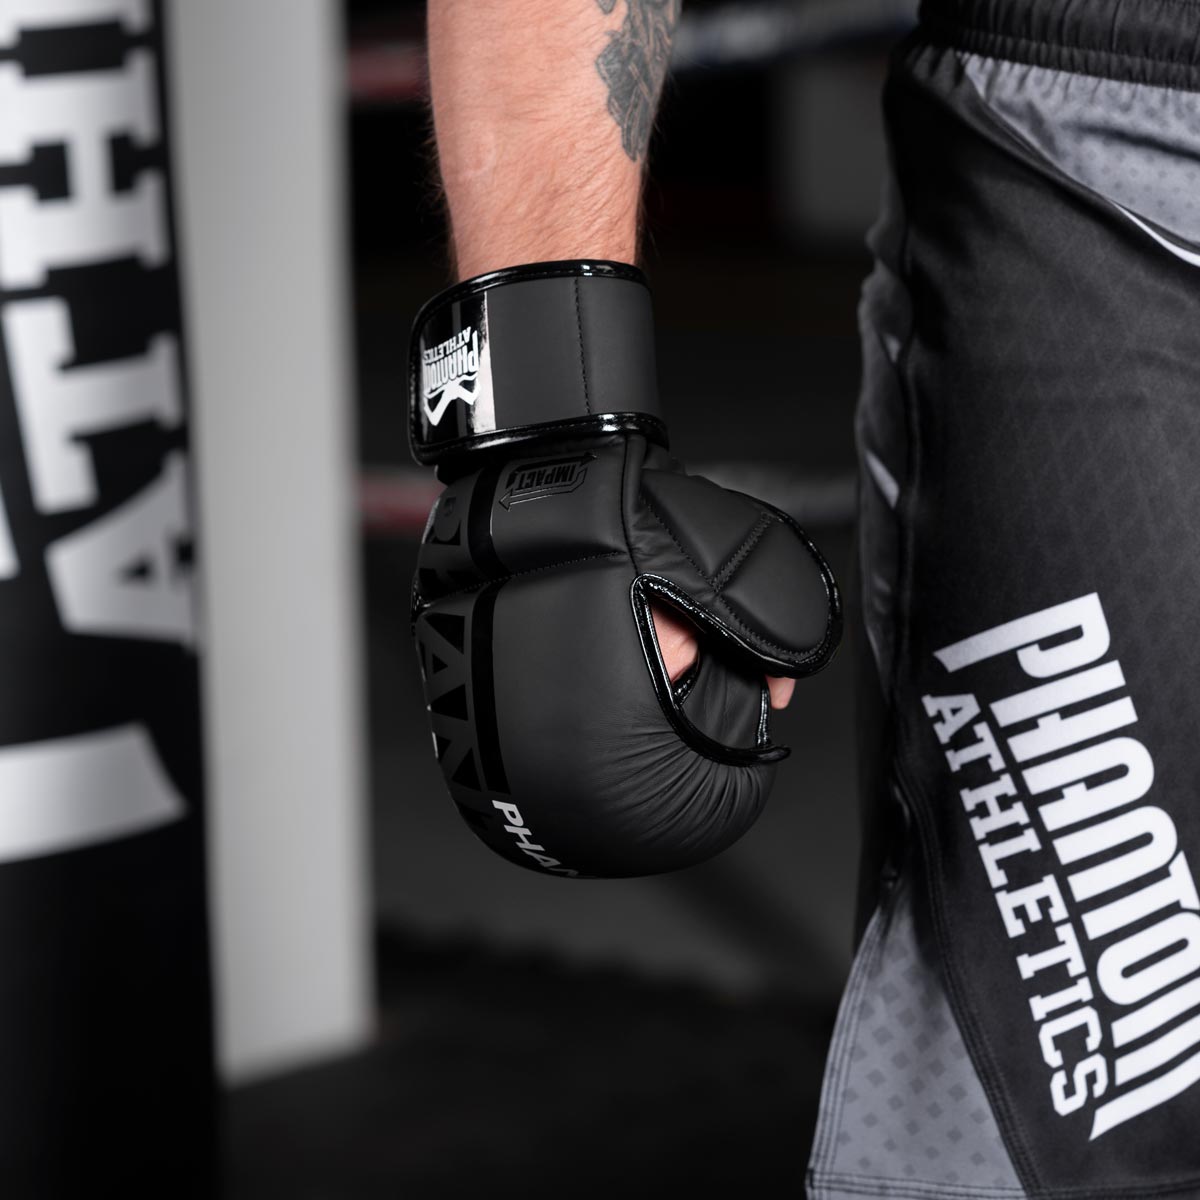 Die Phantom APEX MMA Sparring Handschuhe im Gym